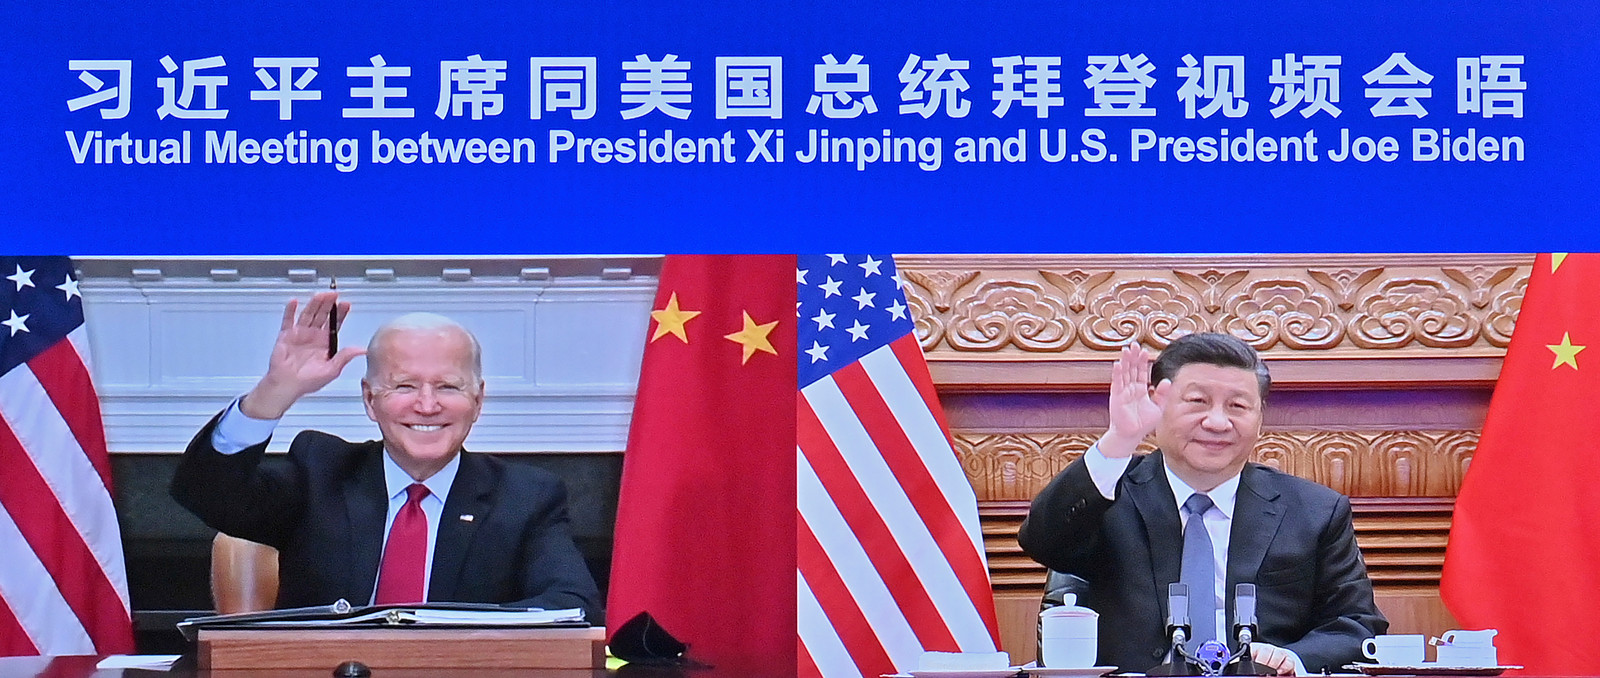 De Chinese President Xi Jinping en de Amerikaanse president Joe Biden tijdens de virtuele top.